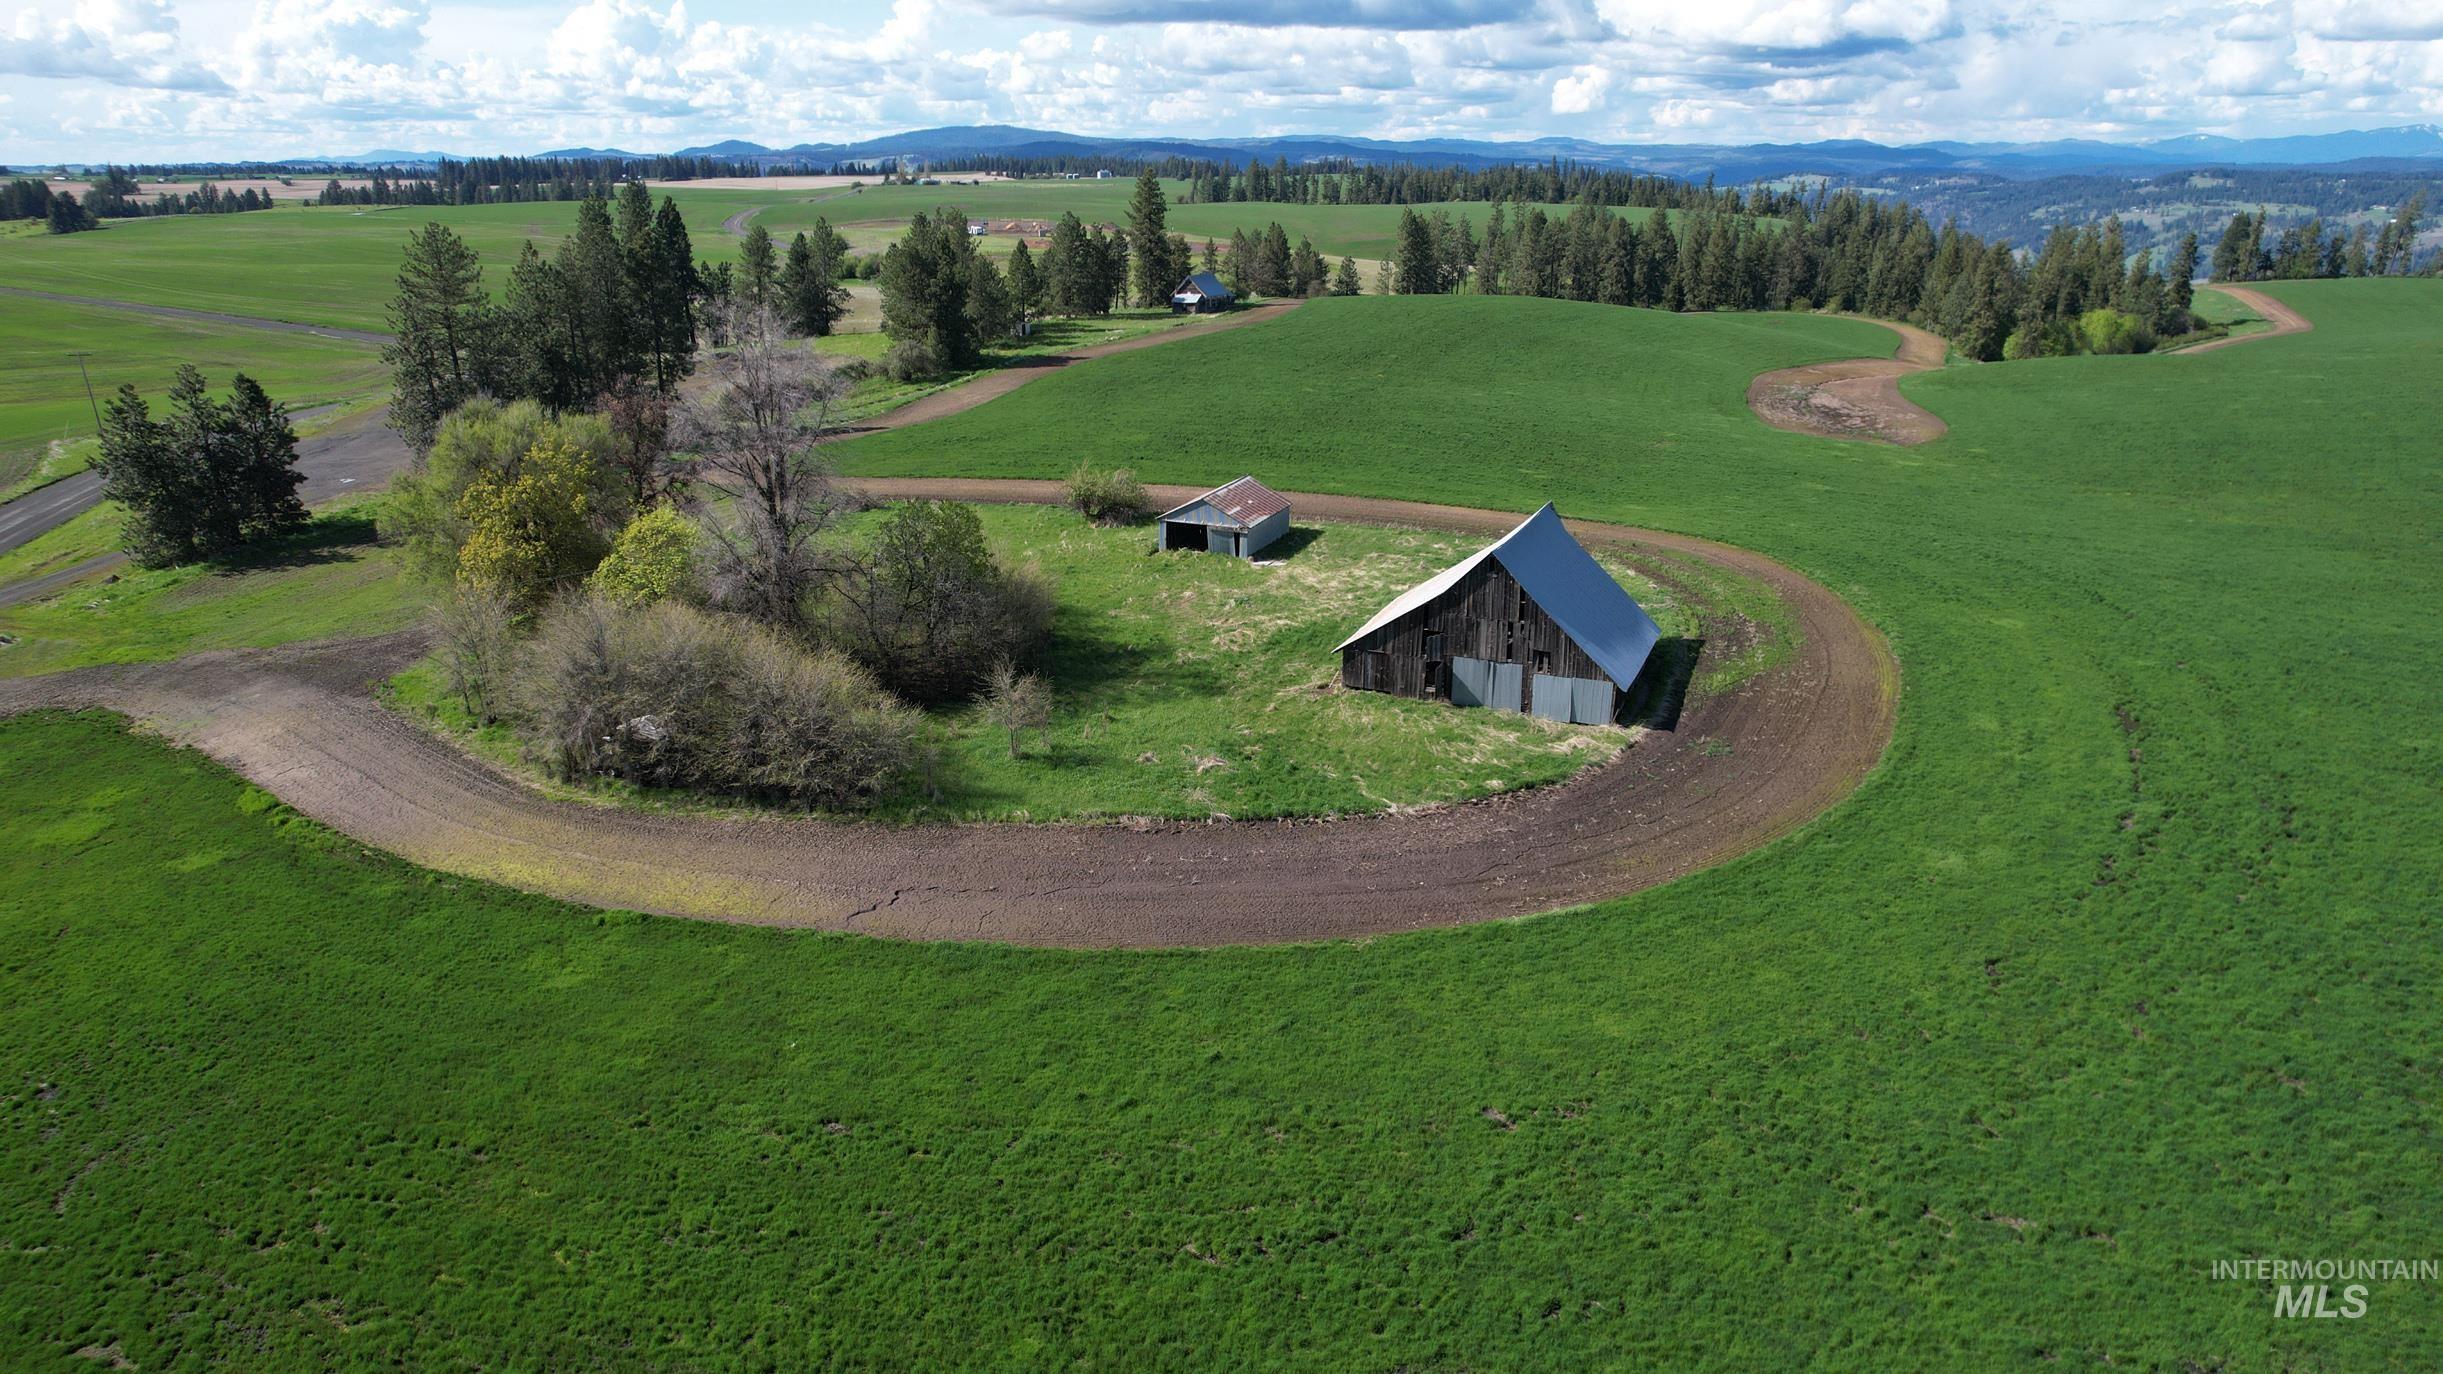 TBD Gilbert Grade Road, Orofino, Idaho 83544, Farm & Ranch For Sale, Price $1,372,500,MLS 98869387